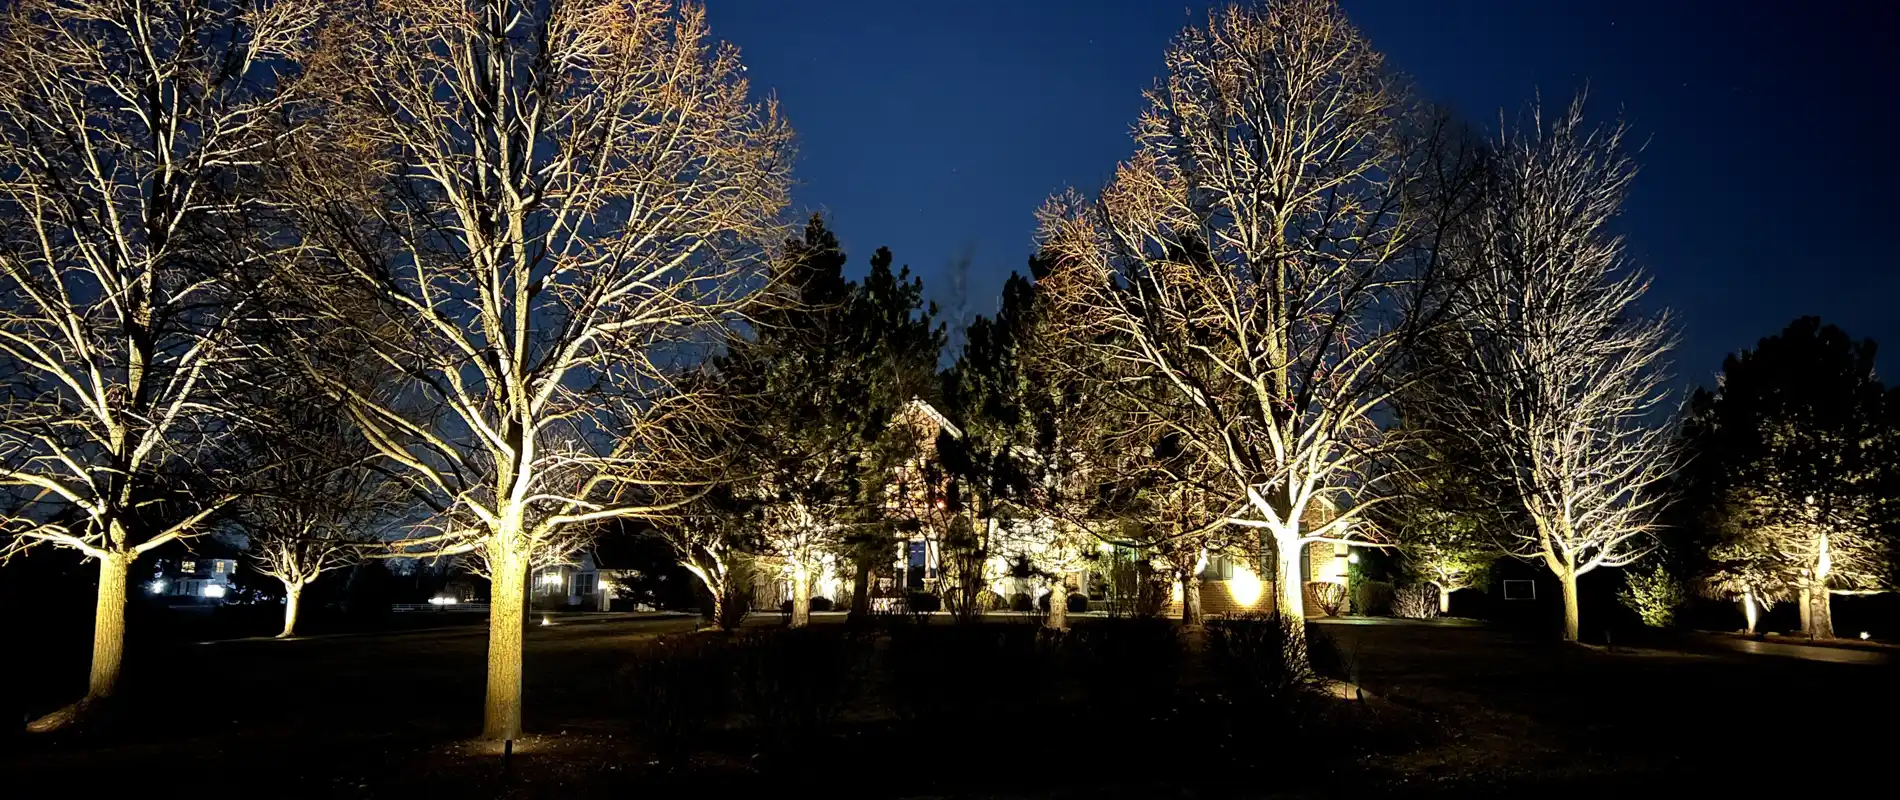 Home tree lighting